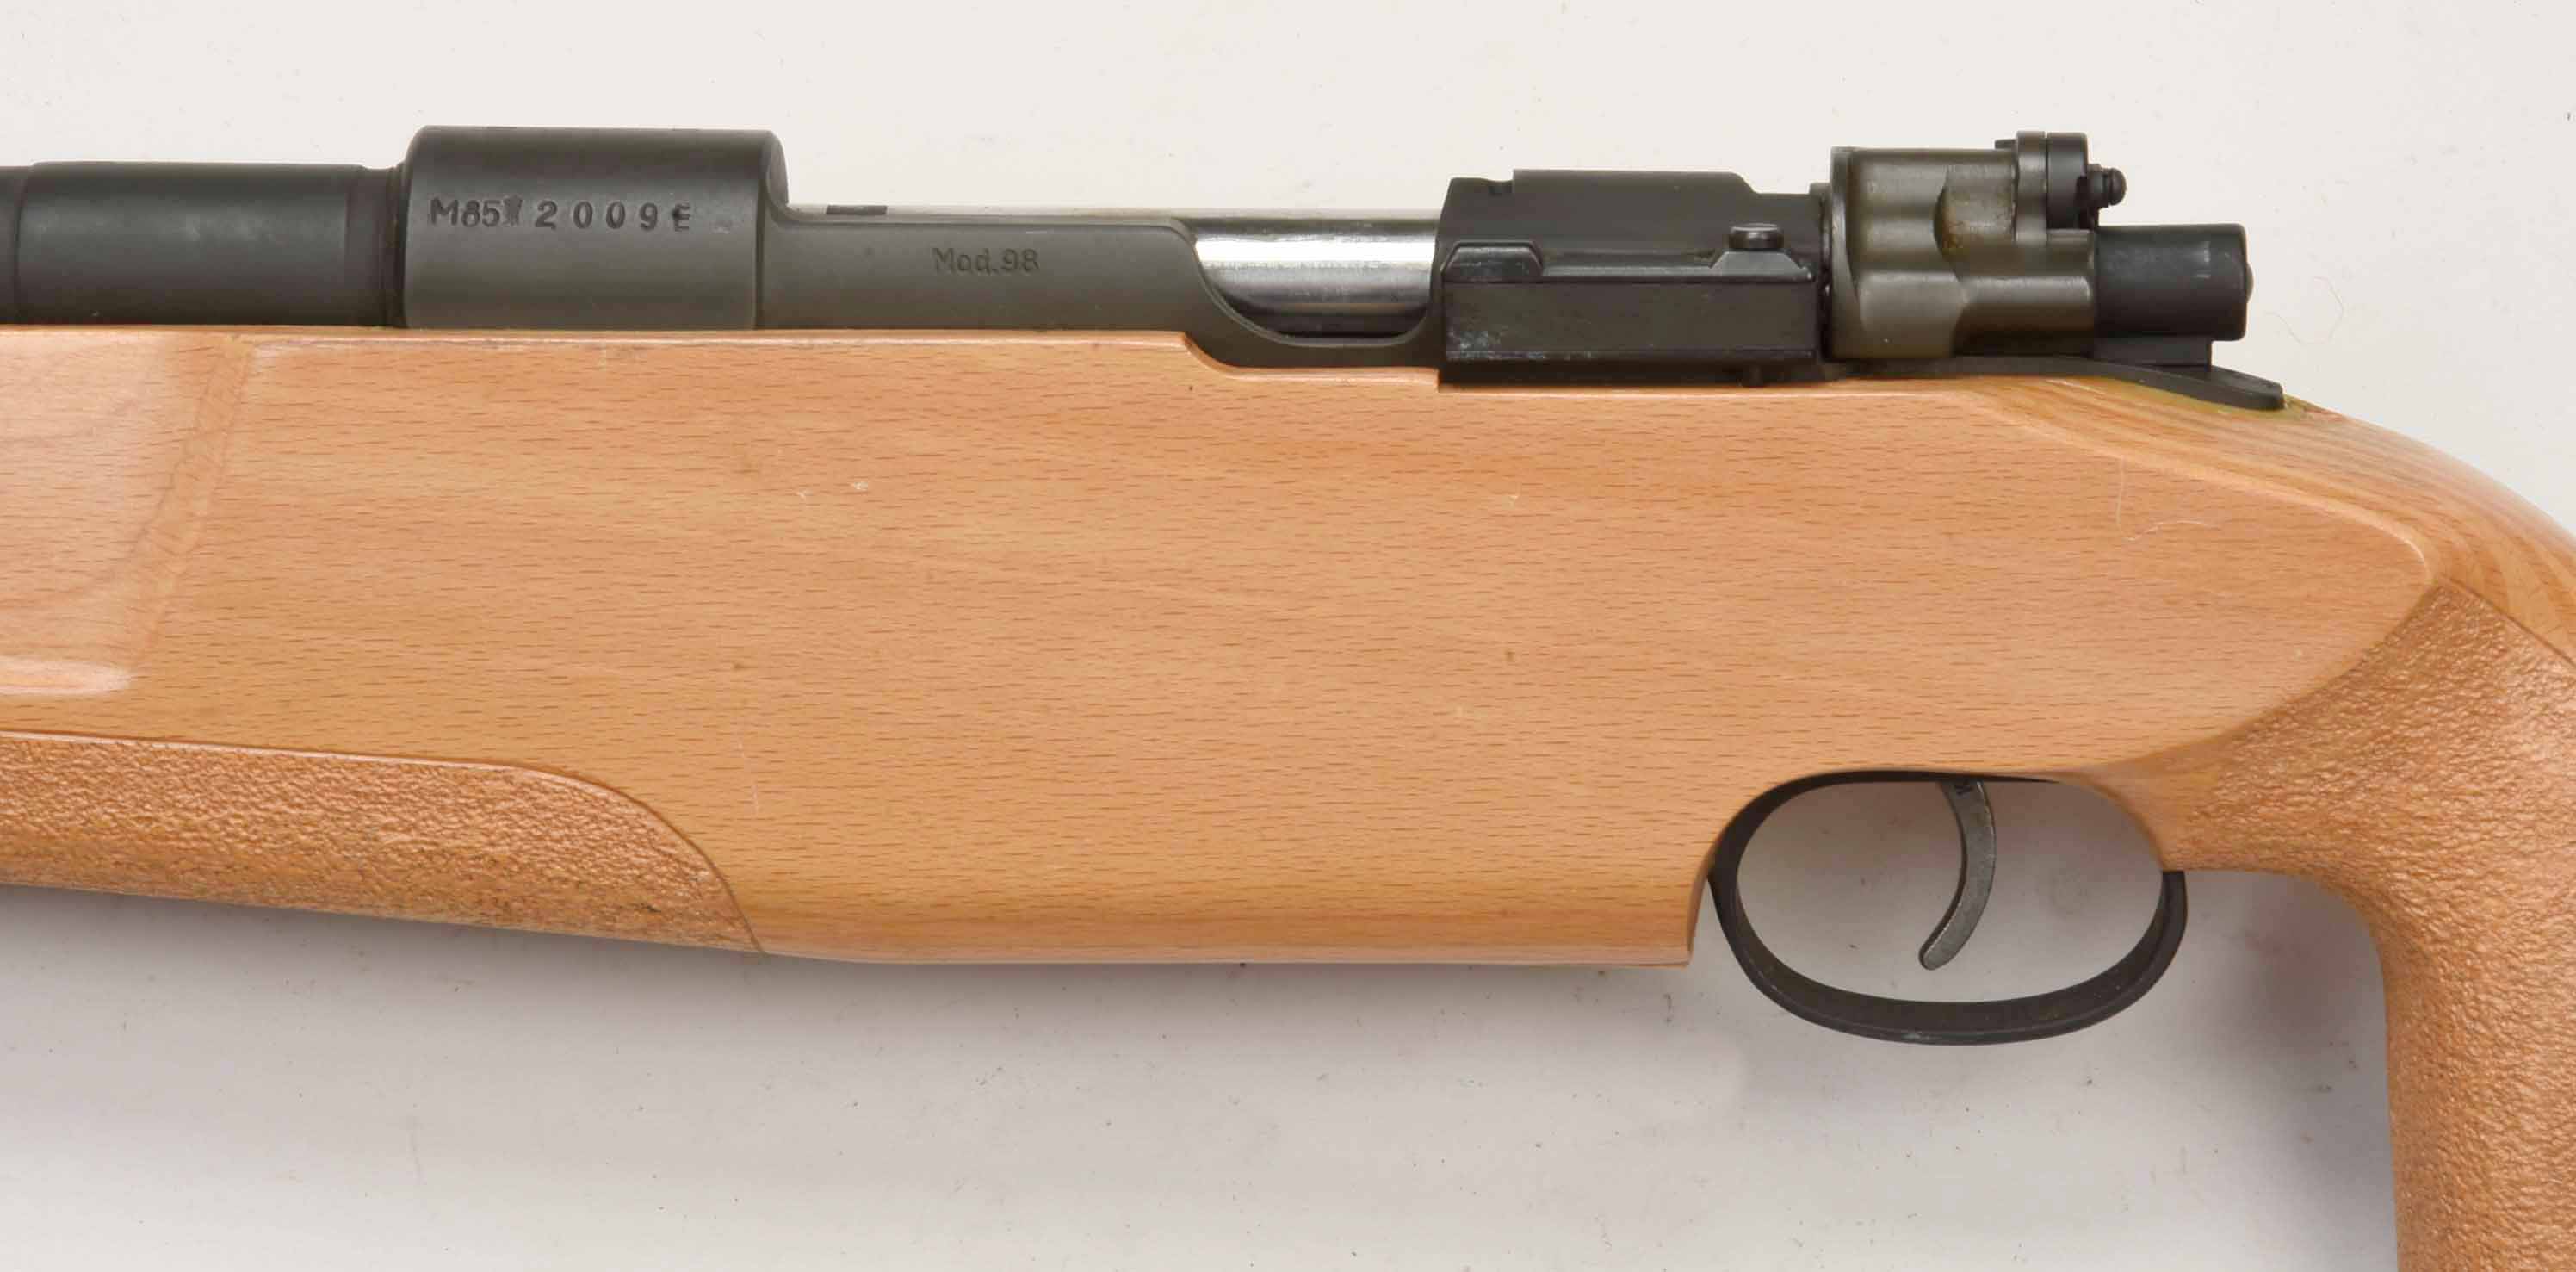 ./guns/rifle/bilder/Rifle-Kongsberg-M85-2009E-4.jpg